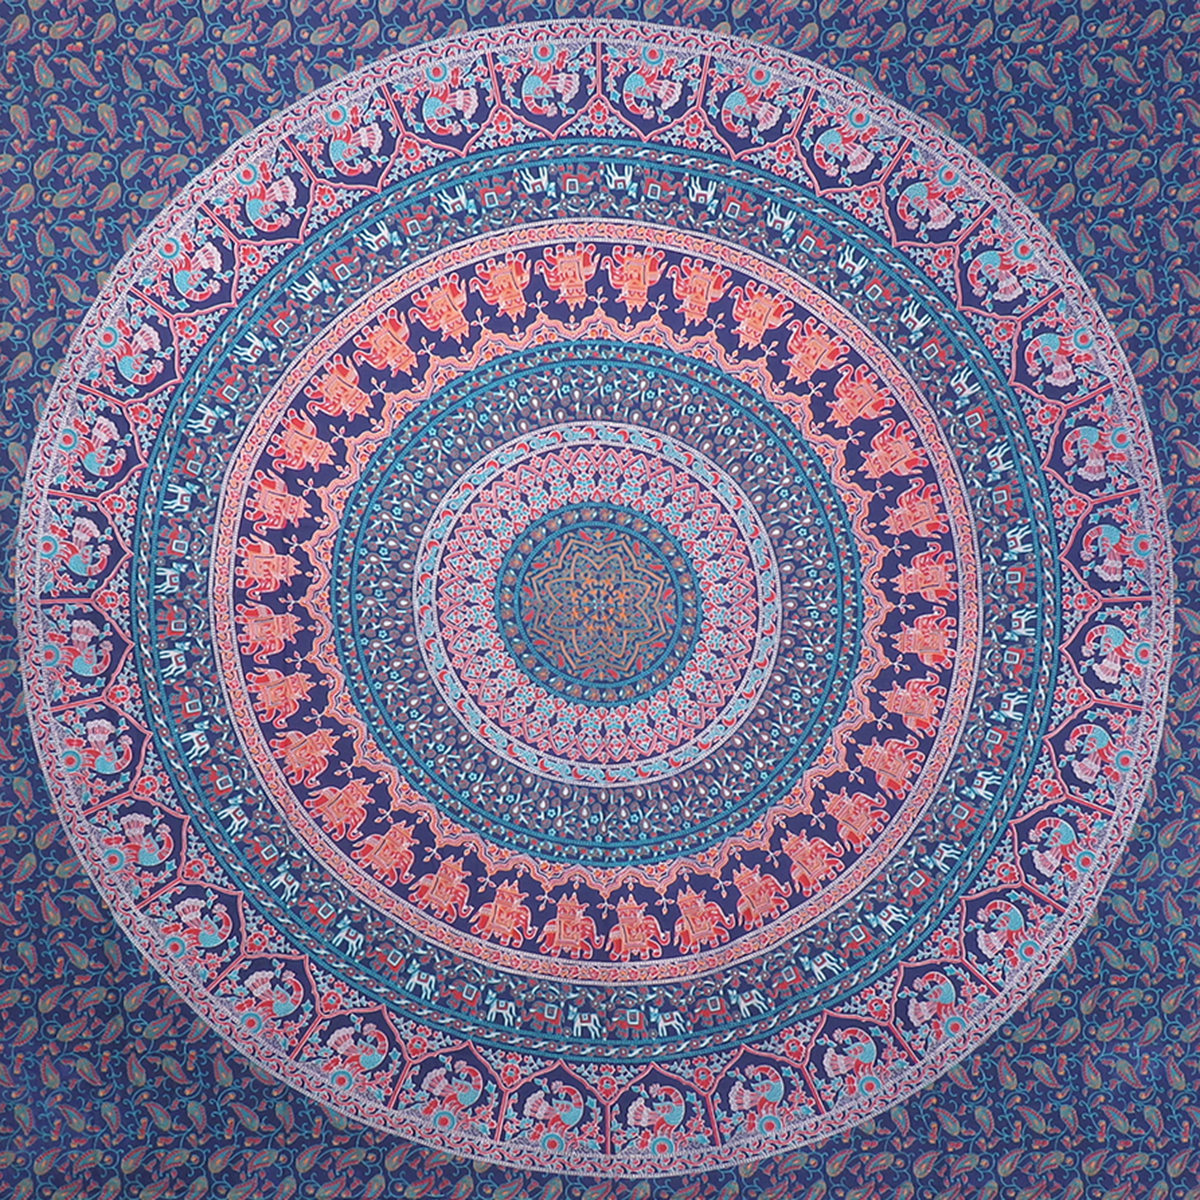 230x180cm200x150cm150x130cm-India-Mandala-Tapestry-Wall-Hanging-Decor-Wall-Cloth-Tapestries-Sandy-Be-1696997-3